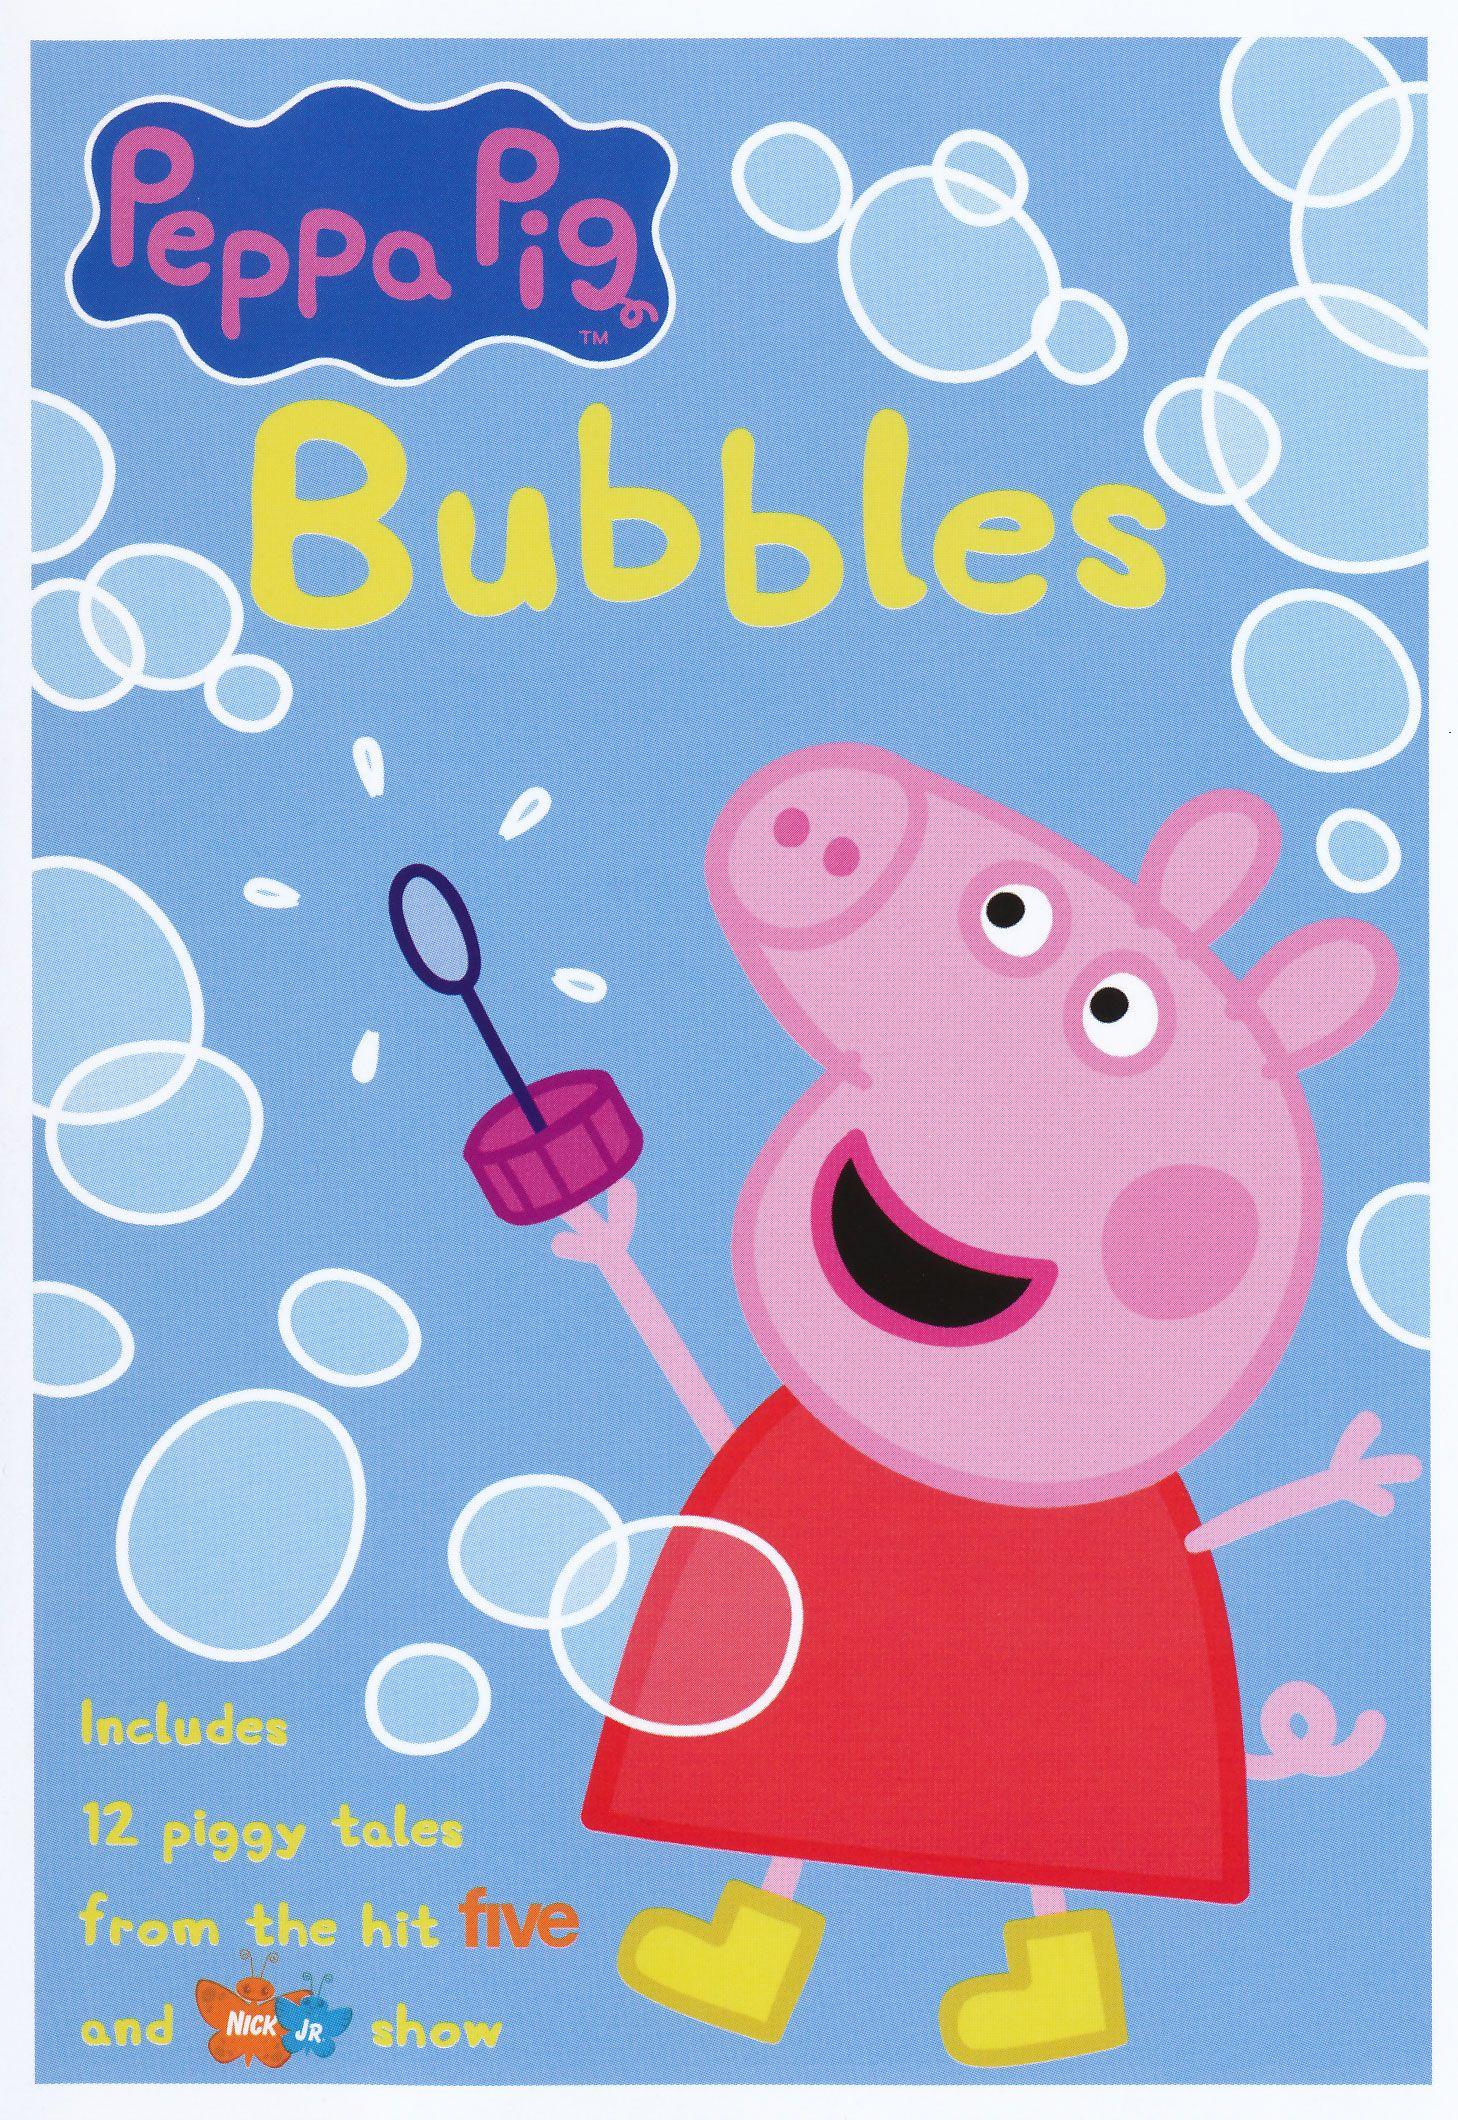 Peppa Pig wallpaper. Peppa pig bubbles, Peppa pig, Peppa